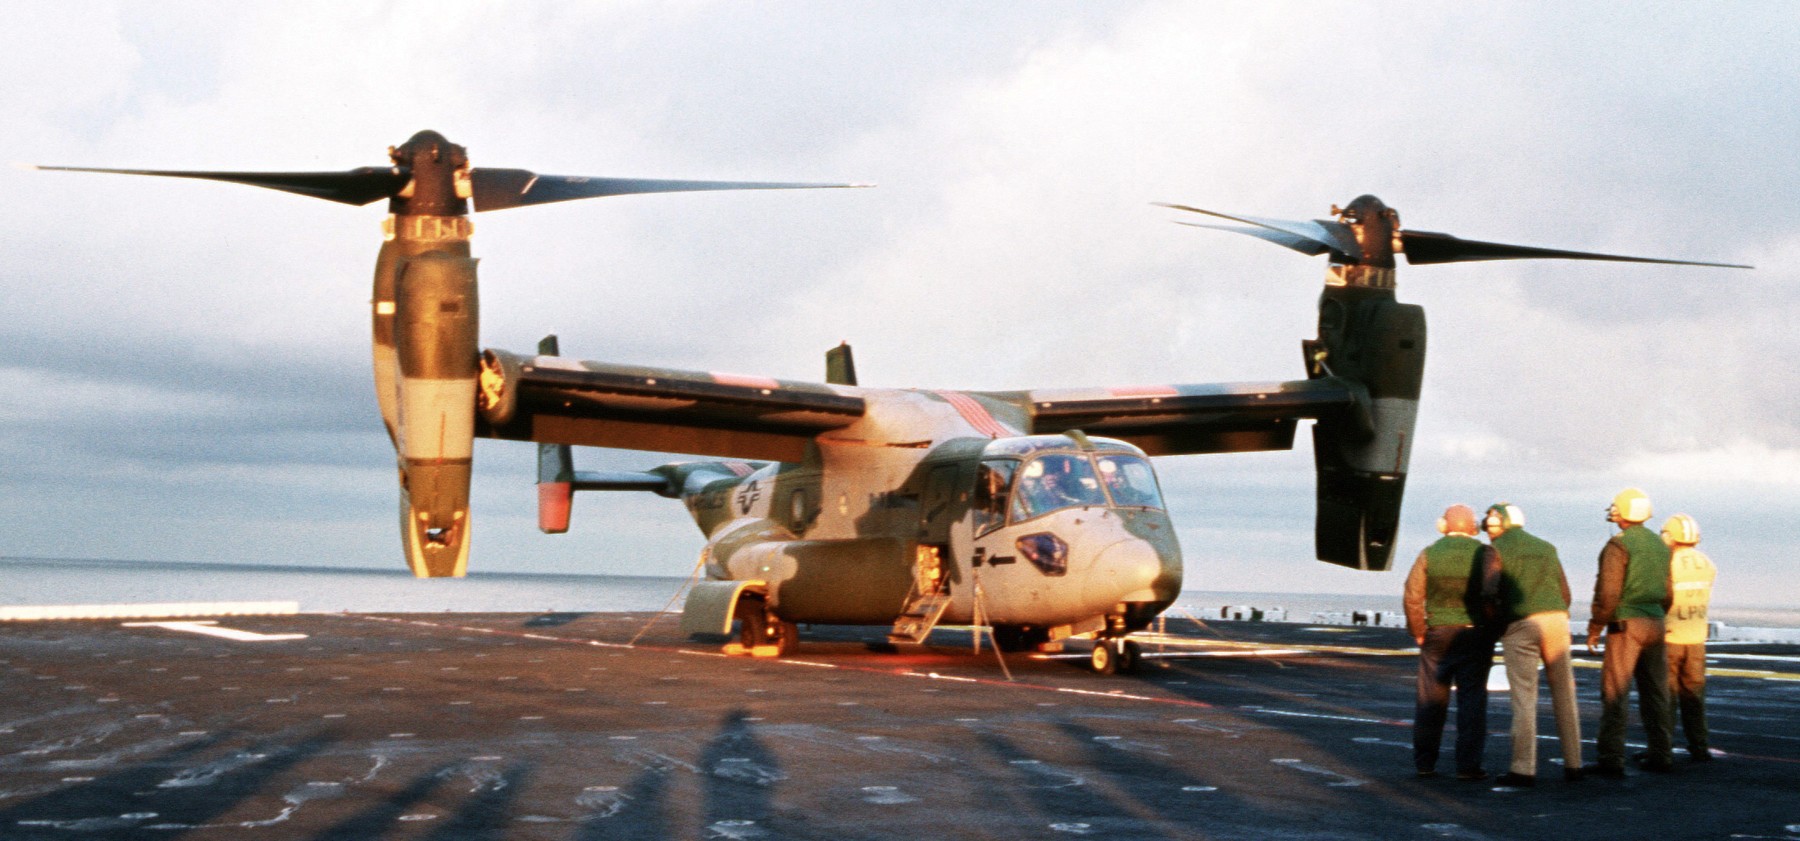 lhd-1 uss wasp amphibious assault landing ship dock helicopter us navy bell v-22a osprey 65